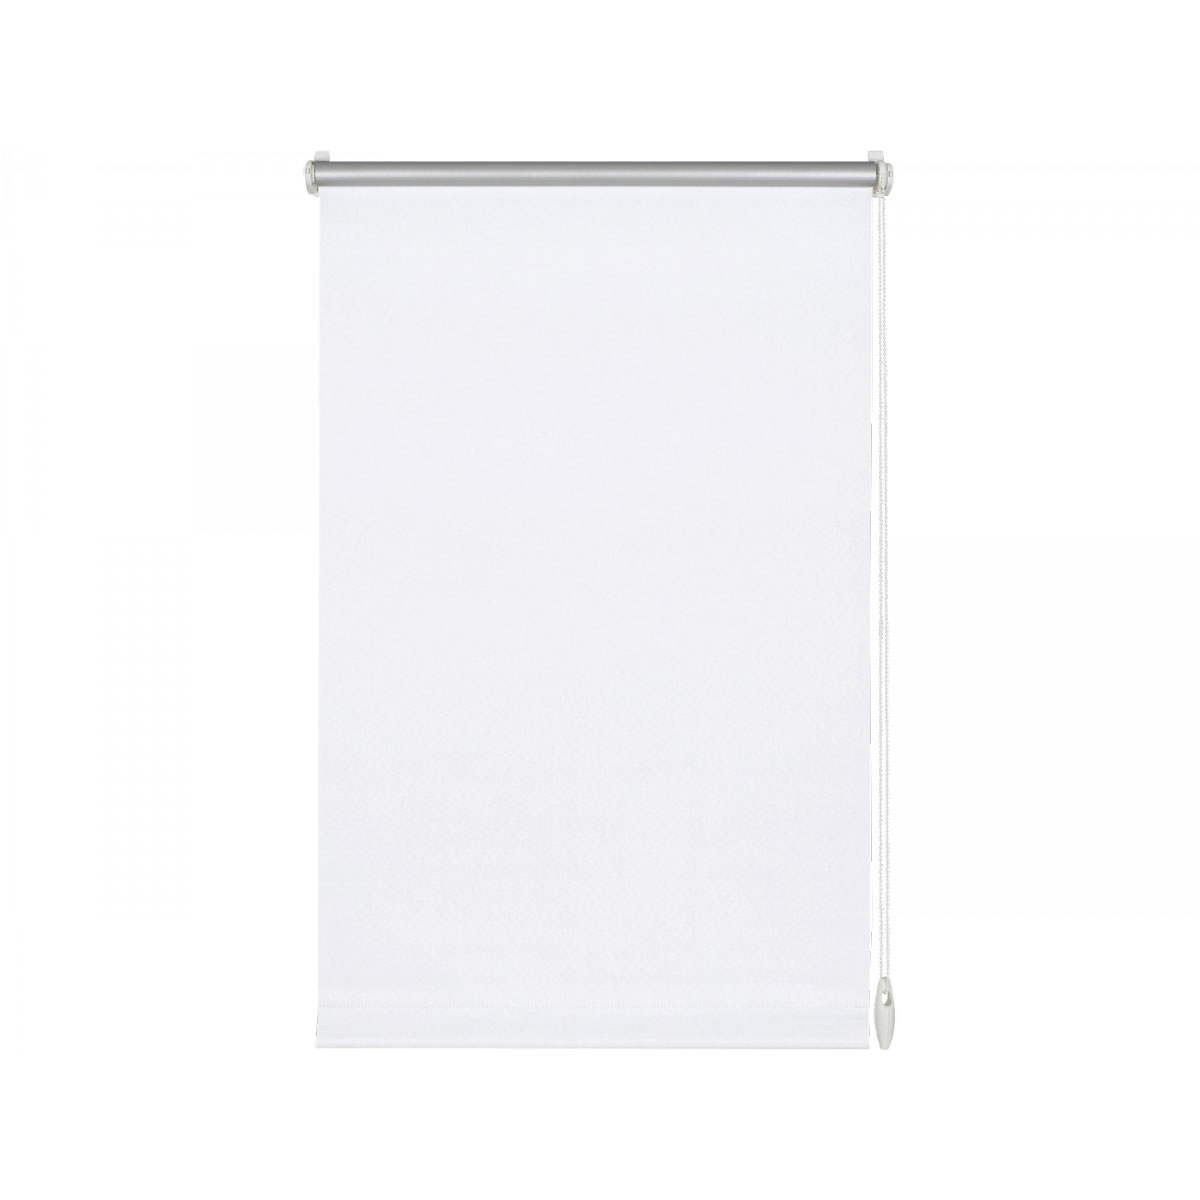 Rollo „Easyfix“ Uni Thermo energiesparend, 90x210 cm, weiß